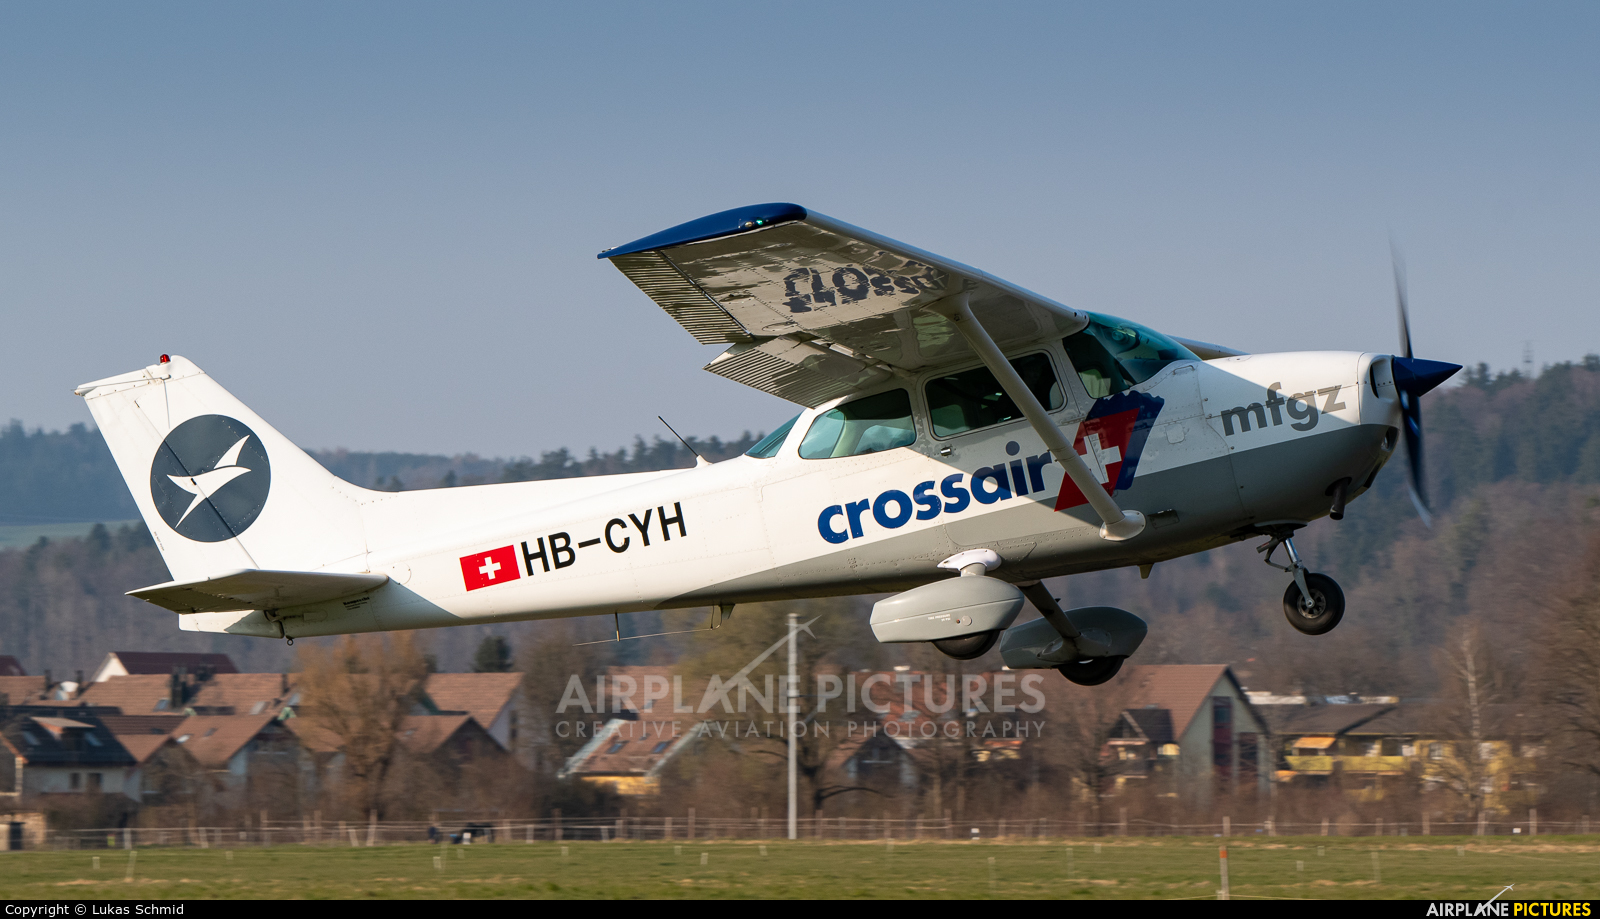 Motorfluggruppe Zürich HB-CYH aircraft at Off Airport - Switzerland